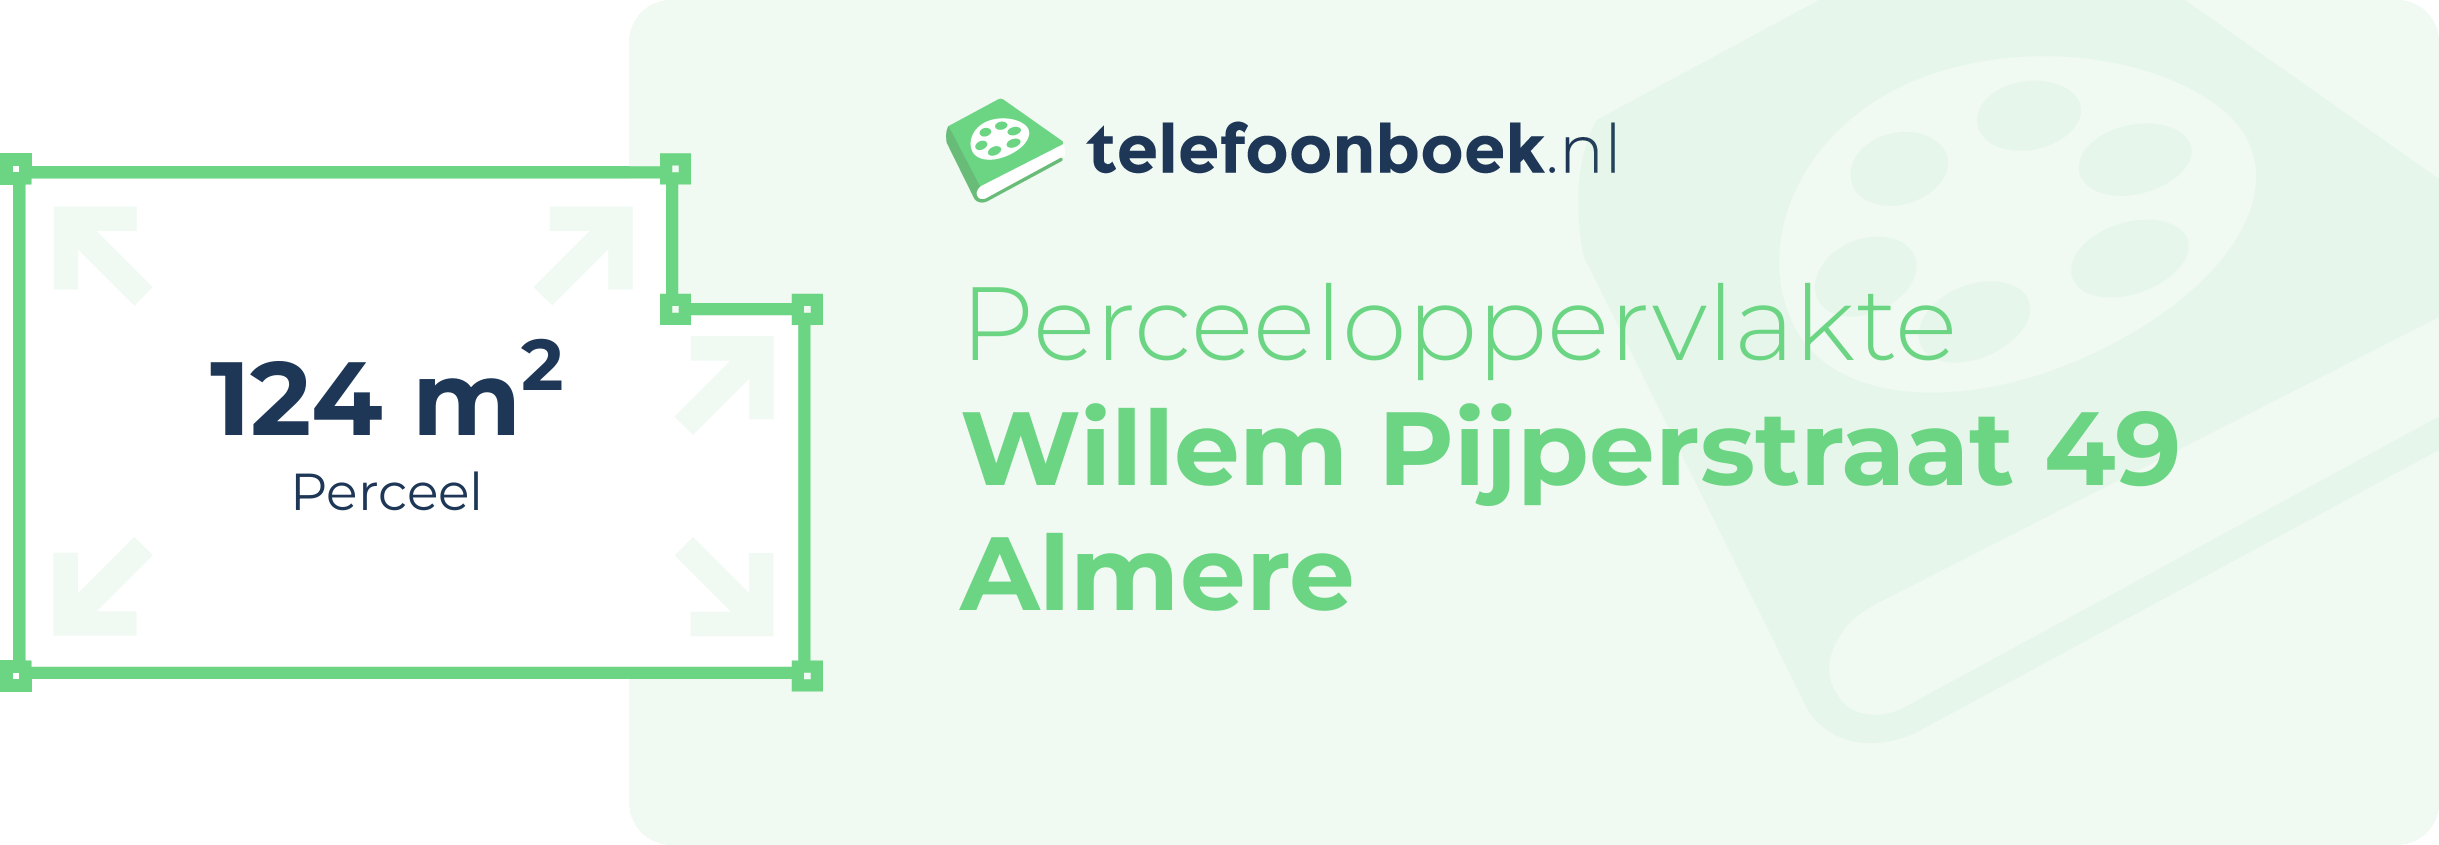 Perceeloppervlakte Willem Pijperstraat 49 Almere